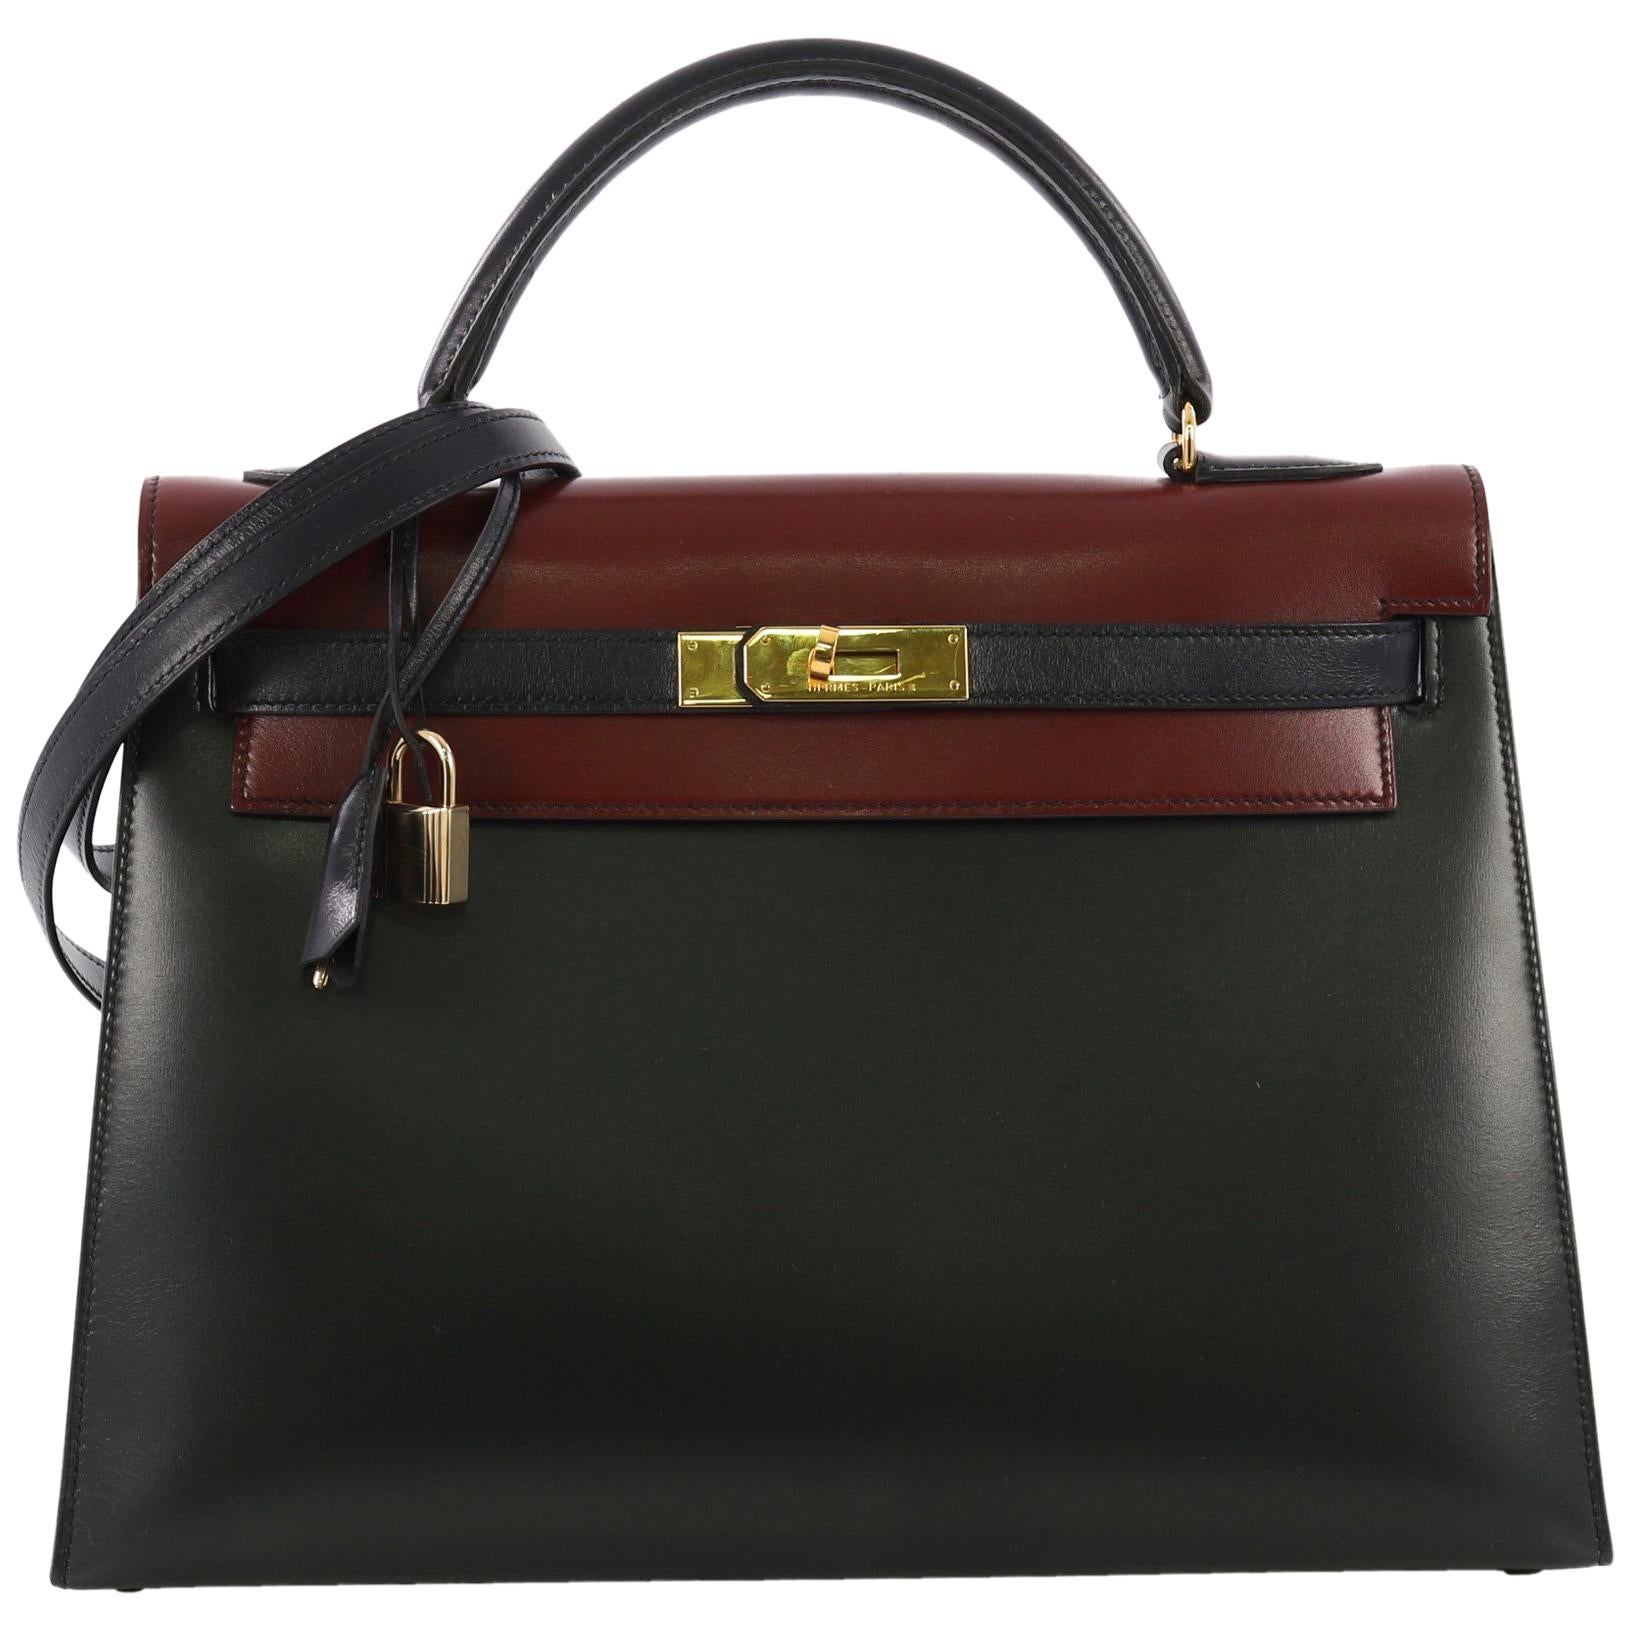 Hermes Kelly Handbag Tricolor Box with Gold Hardware 32